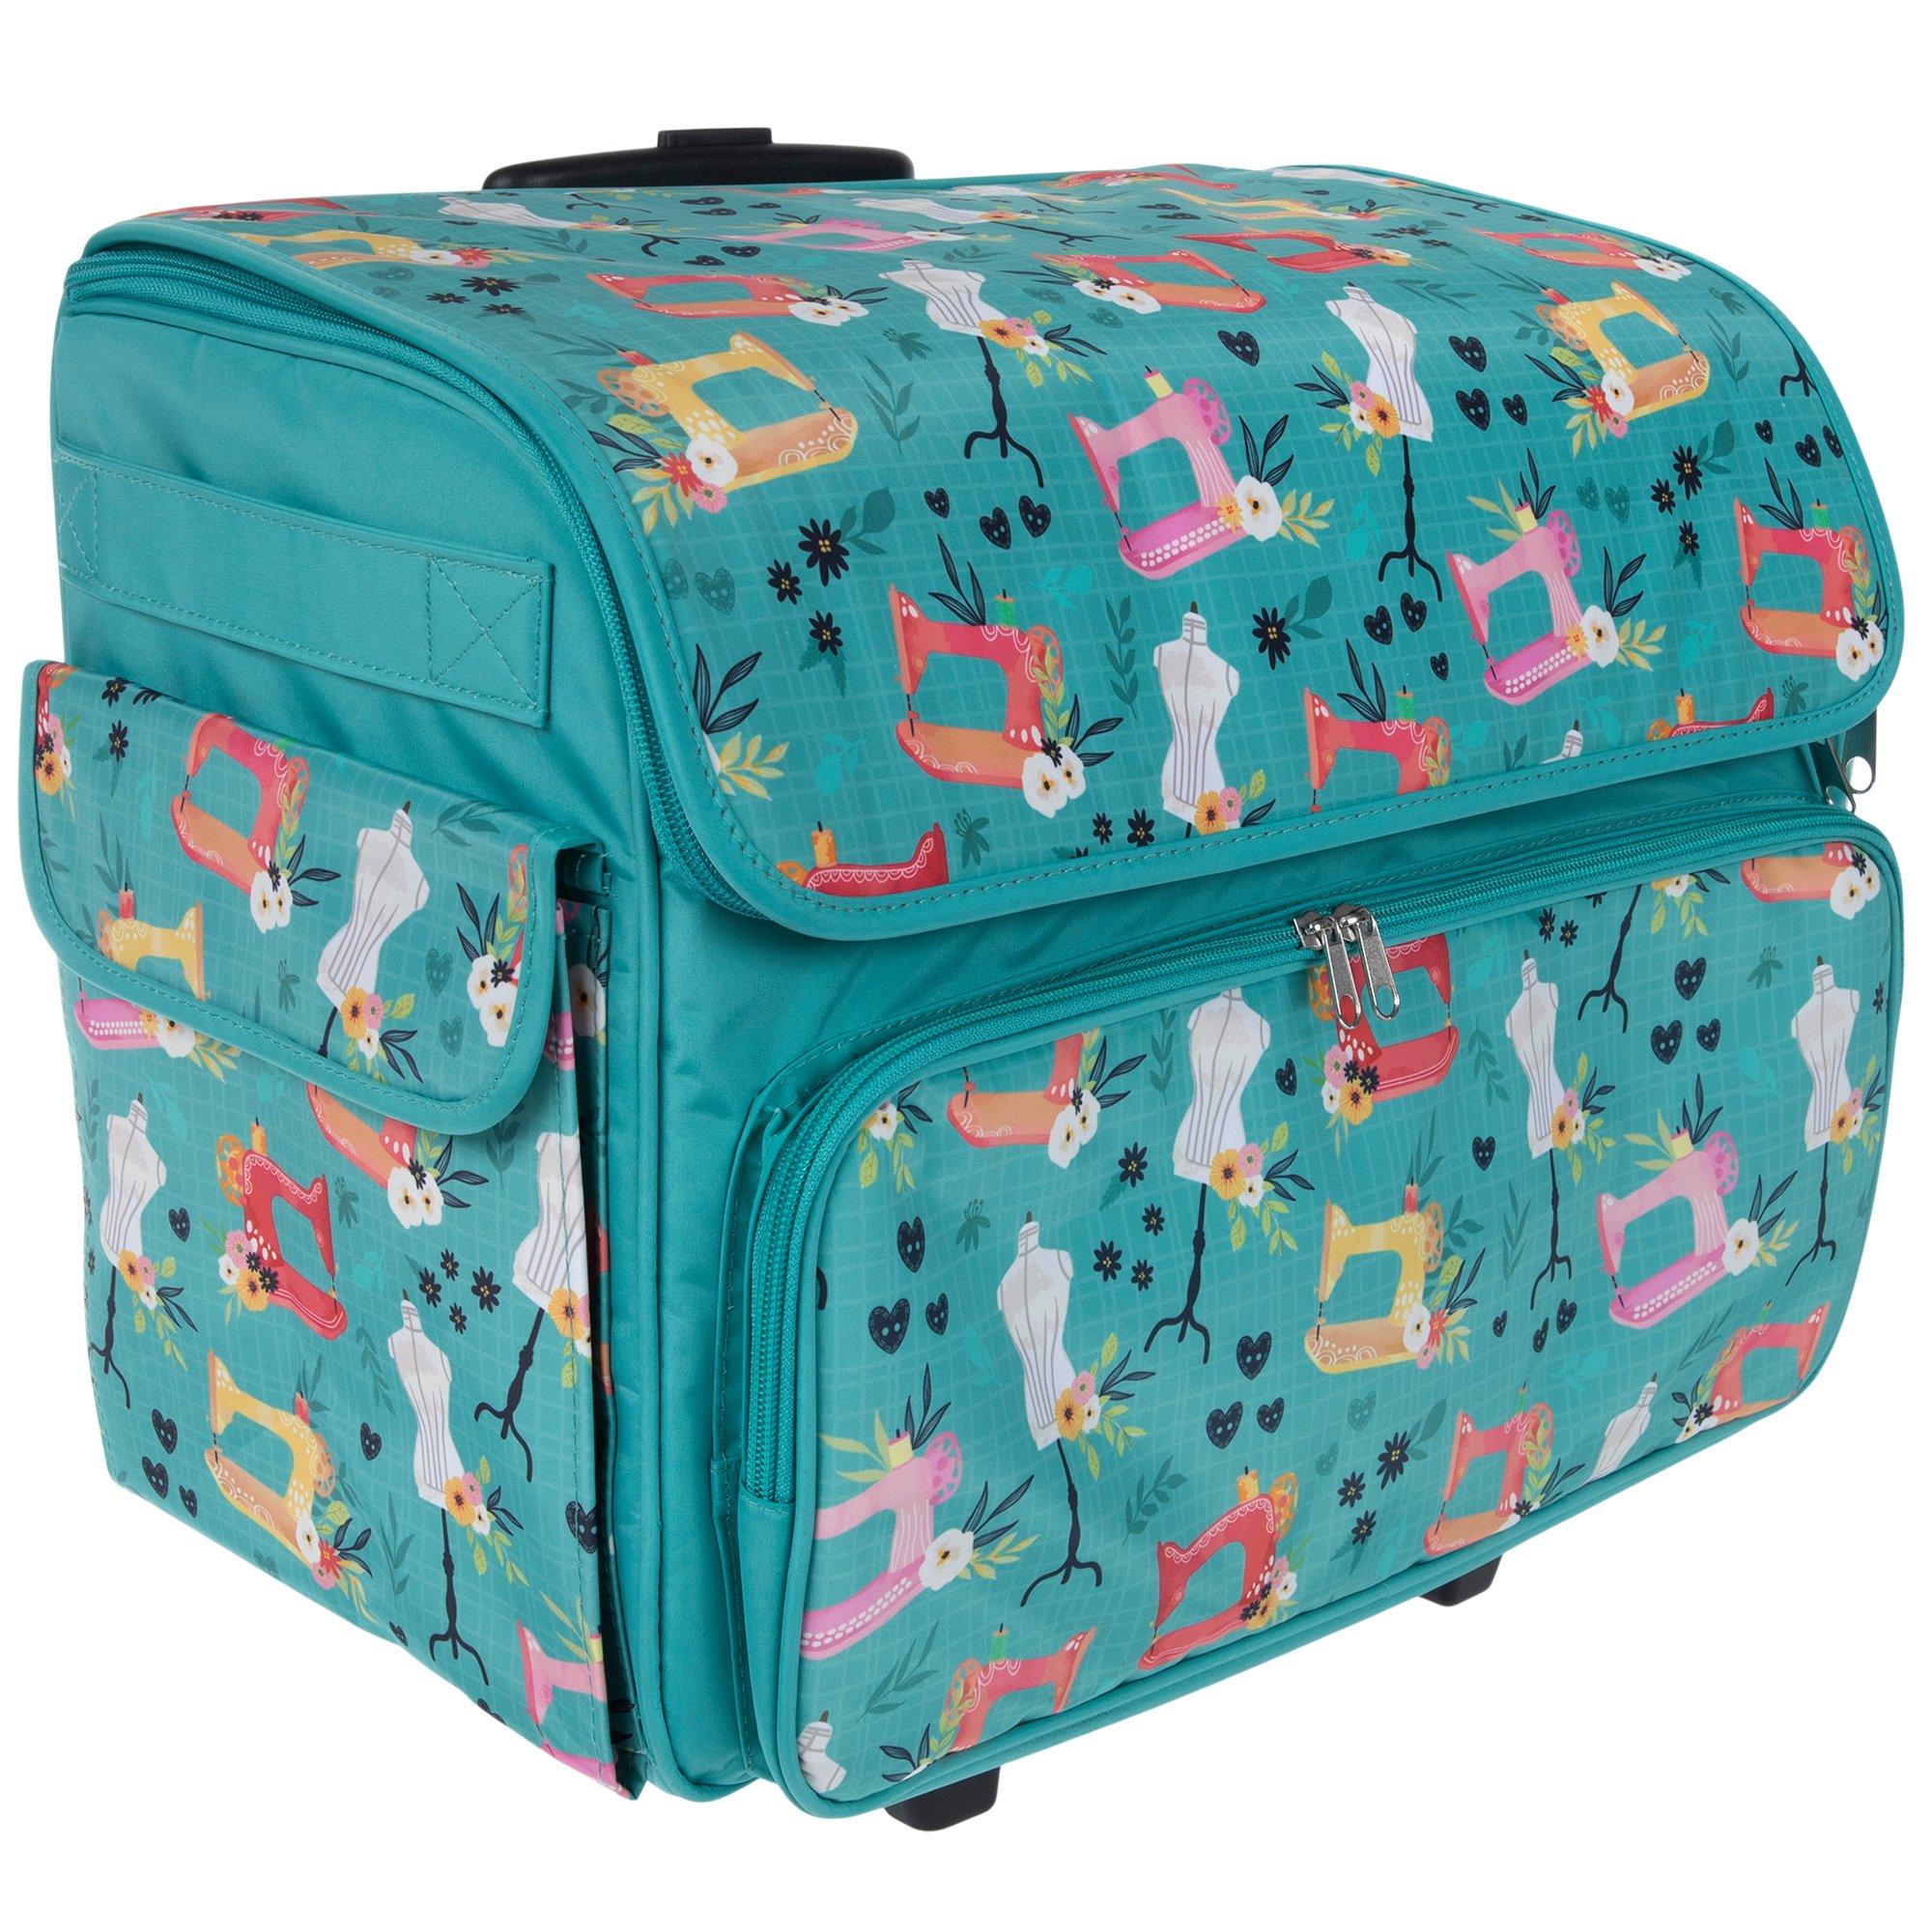 Hobby Gift Mr4660 EAL Sewing Machine Storage and Travel Bag, 47 x 21 x 33cm